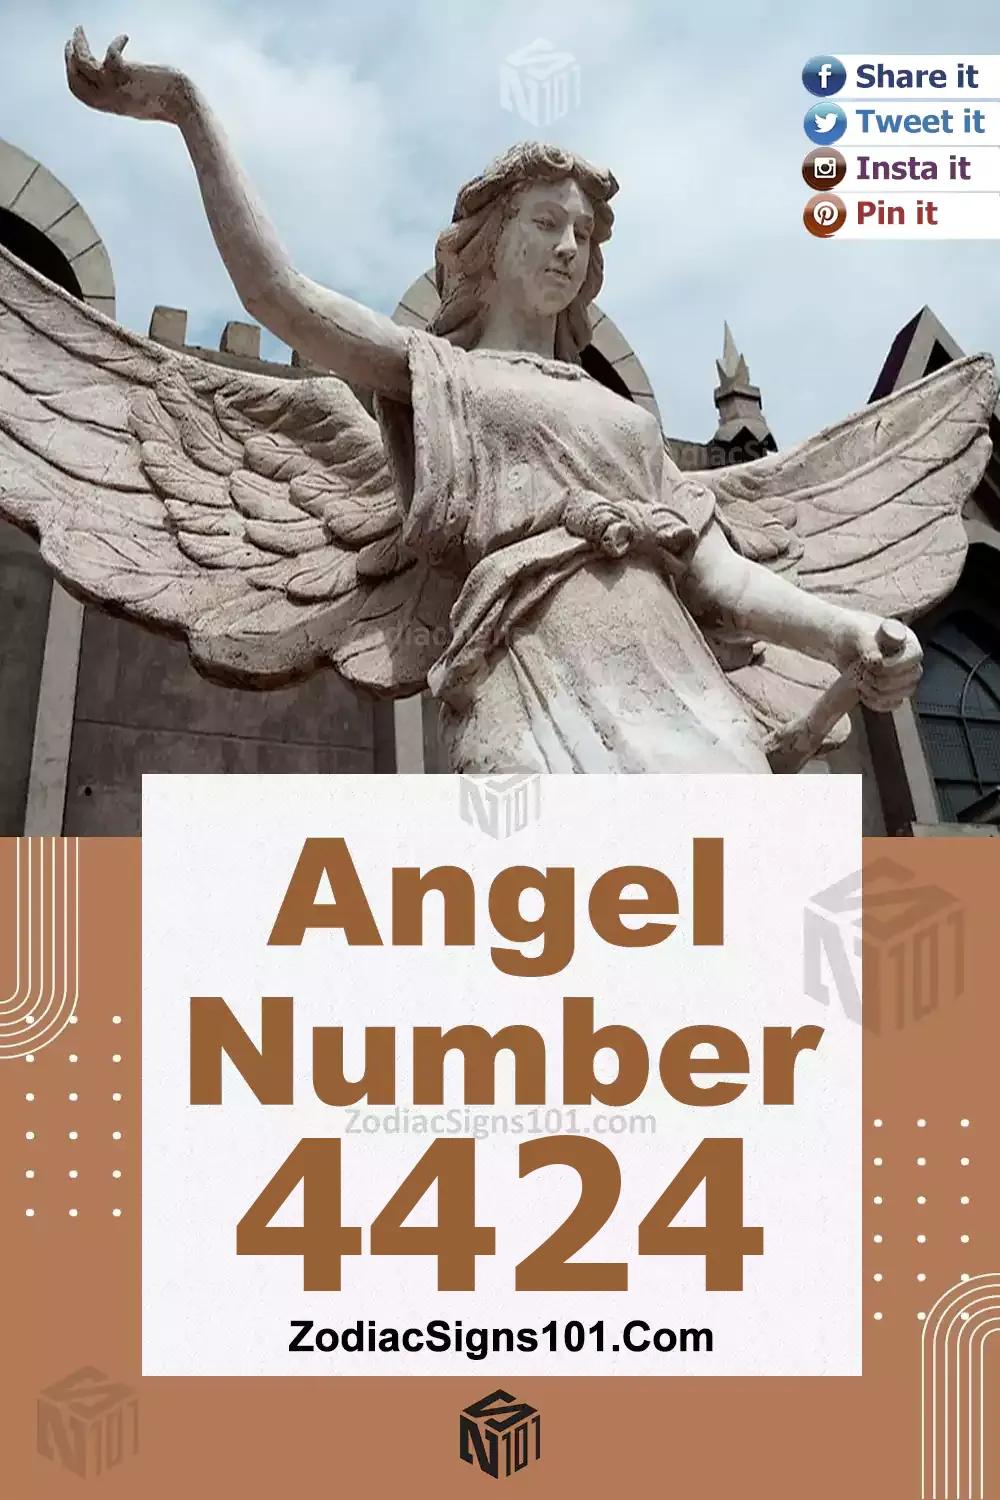 4424-Angel-Number-Meaning.jpg